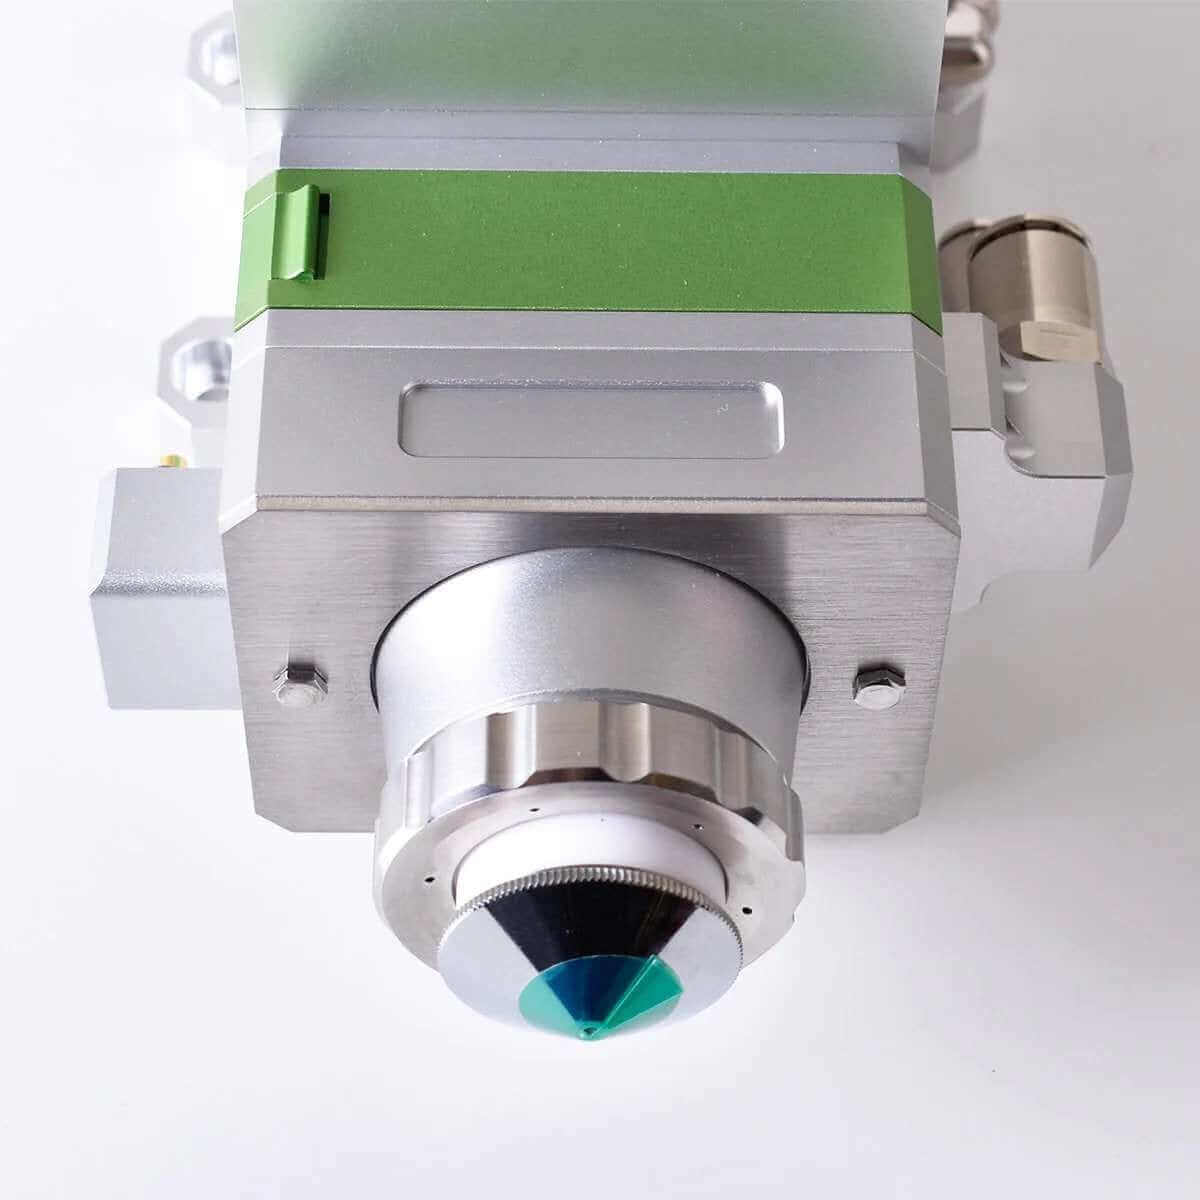 Sky Fire LaserAutomatic Laser Cutting Head-Raytools-BM110 (3300W)Automatic Laser Cutting Head-Raytools-BM110 (3300W)